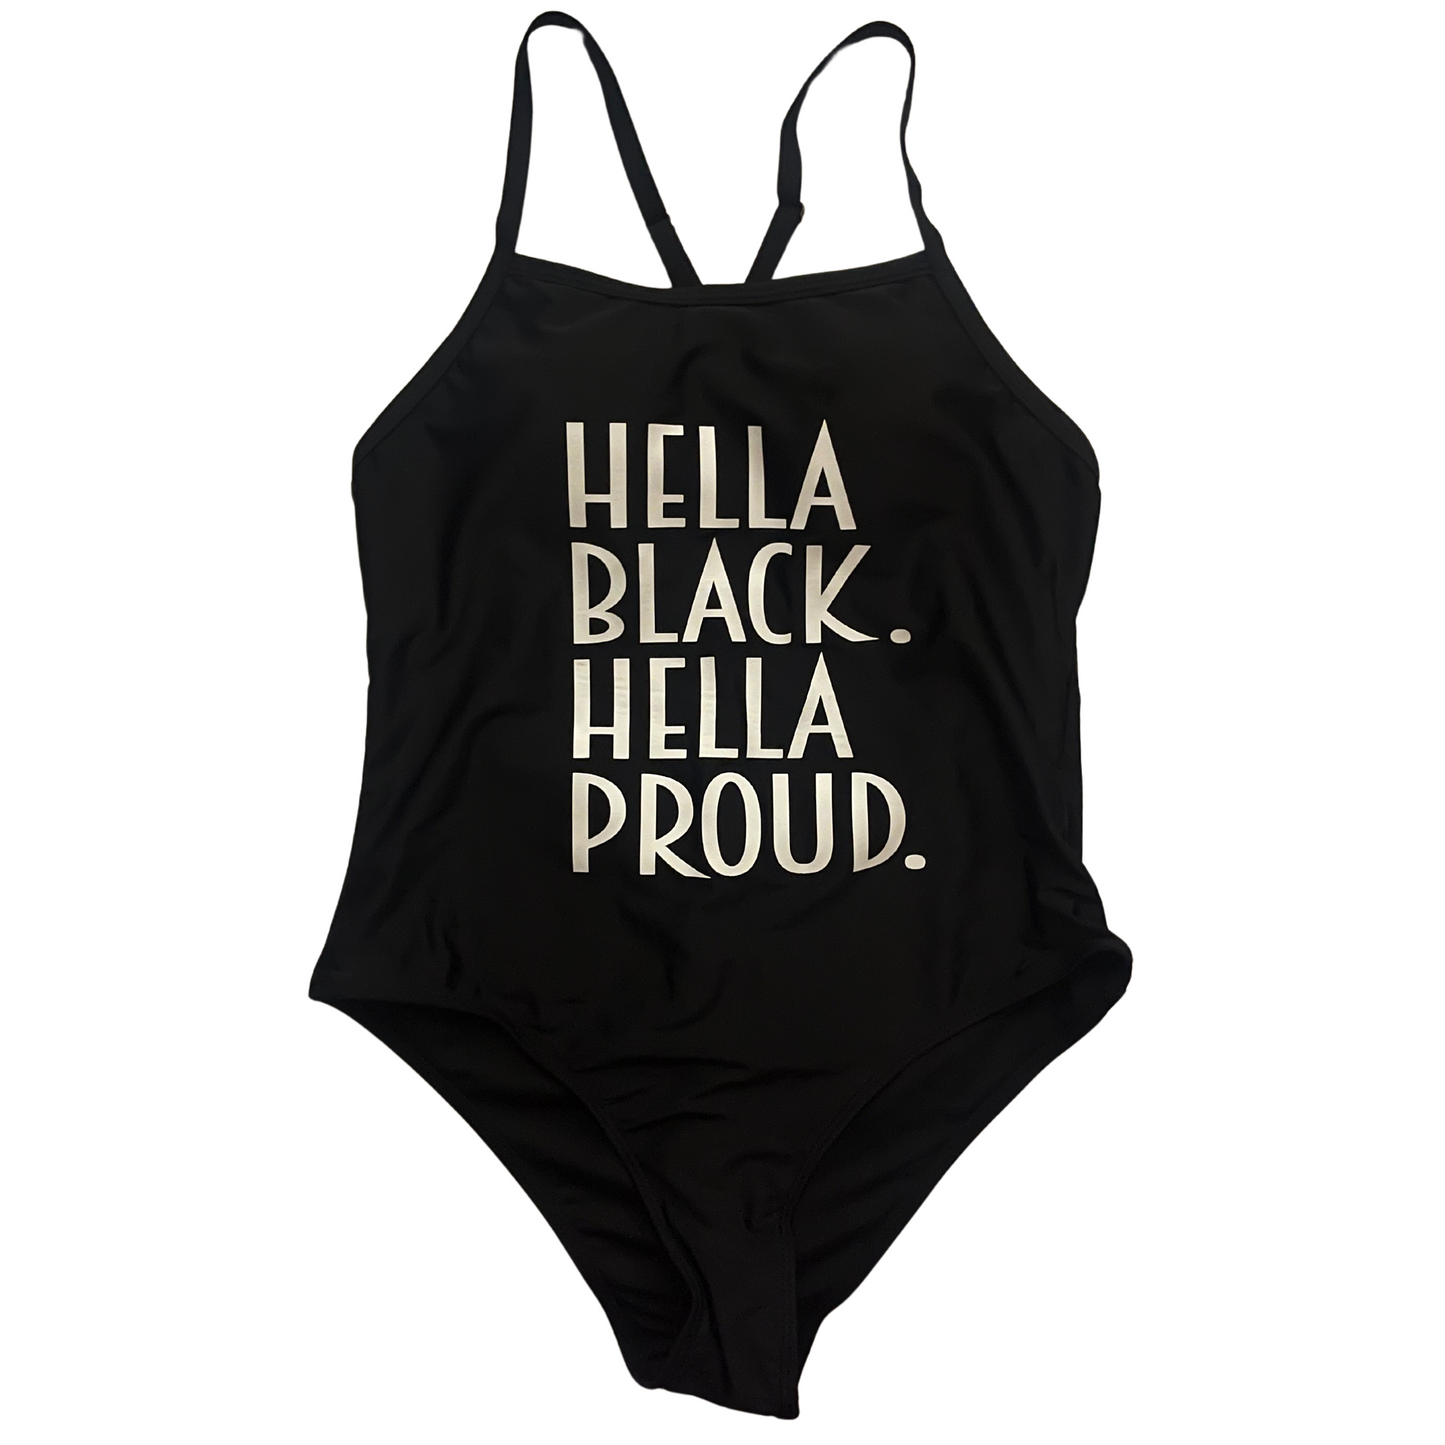 Hella Black Hella Proud Swimsuit (Thin-strapped)